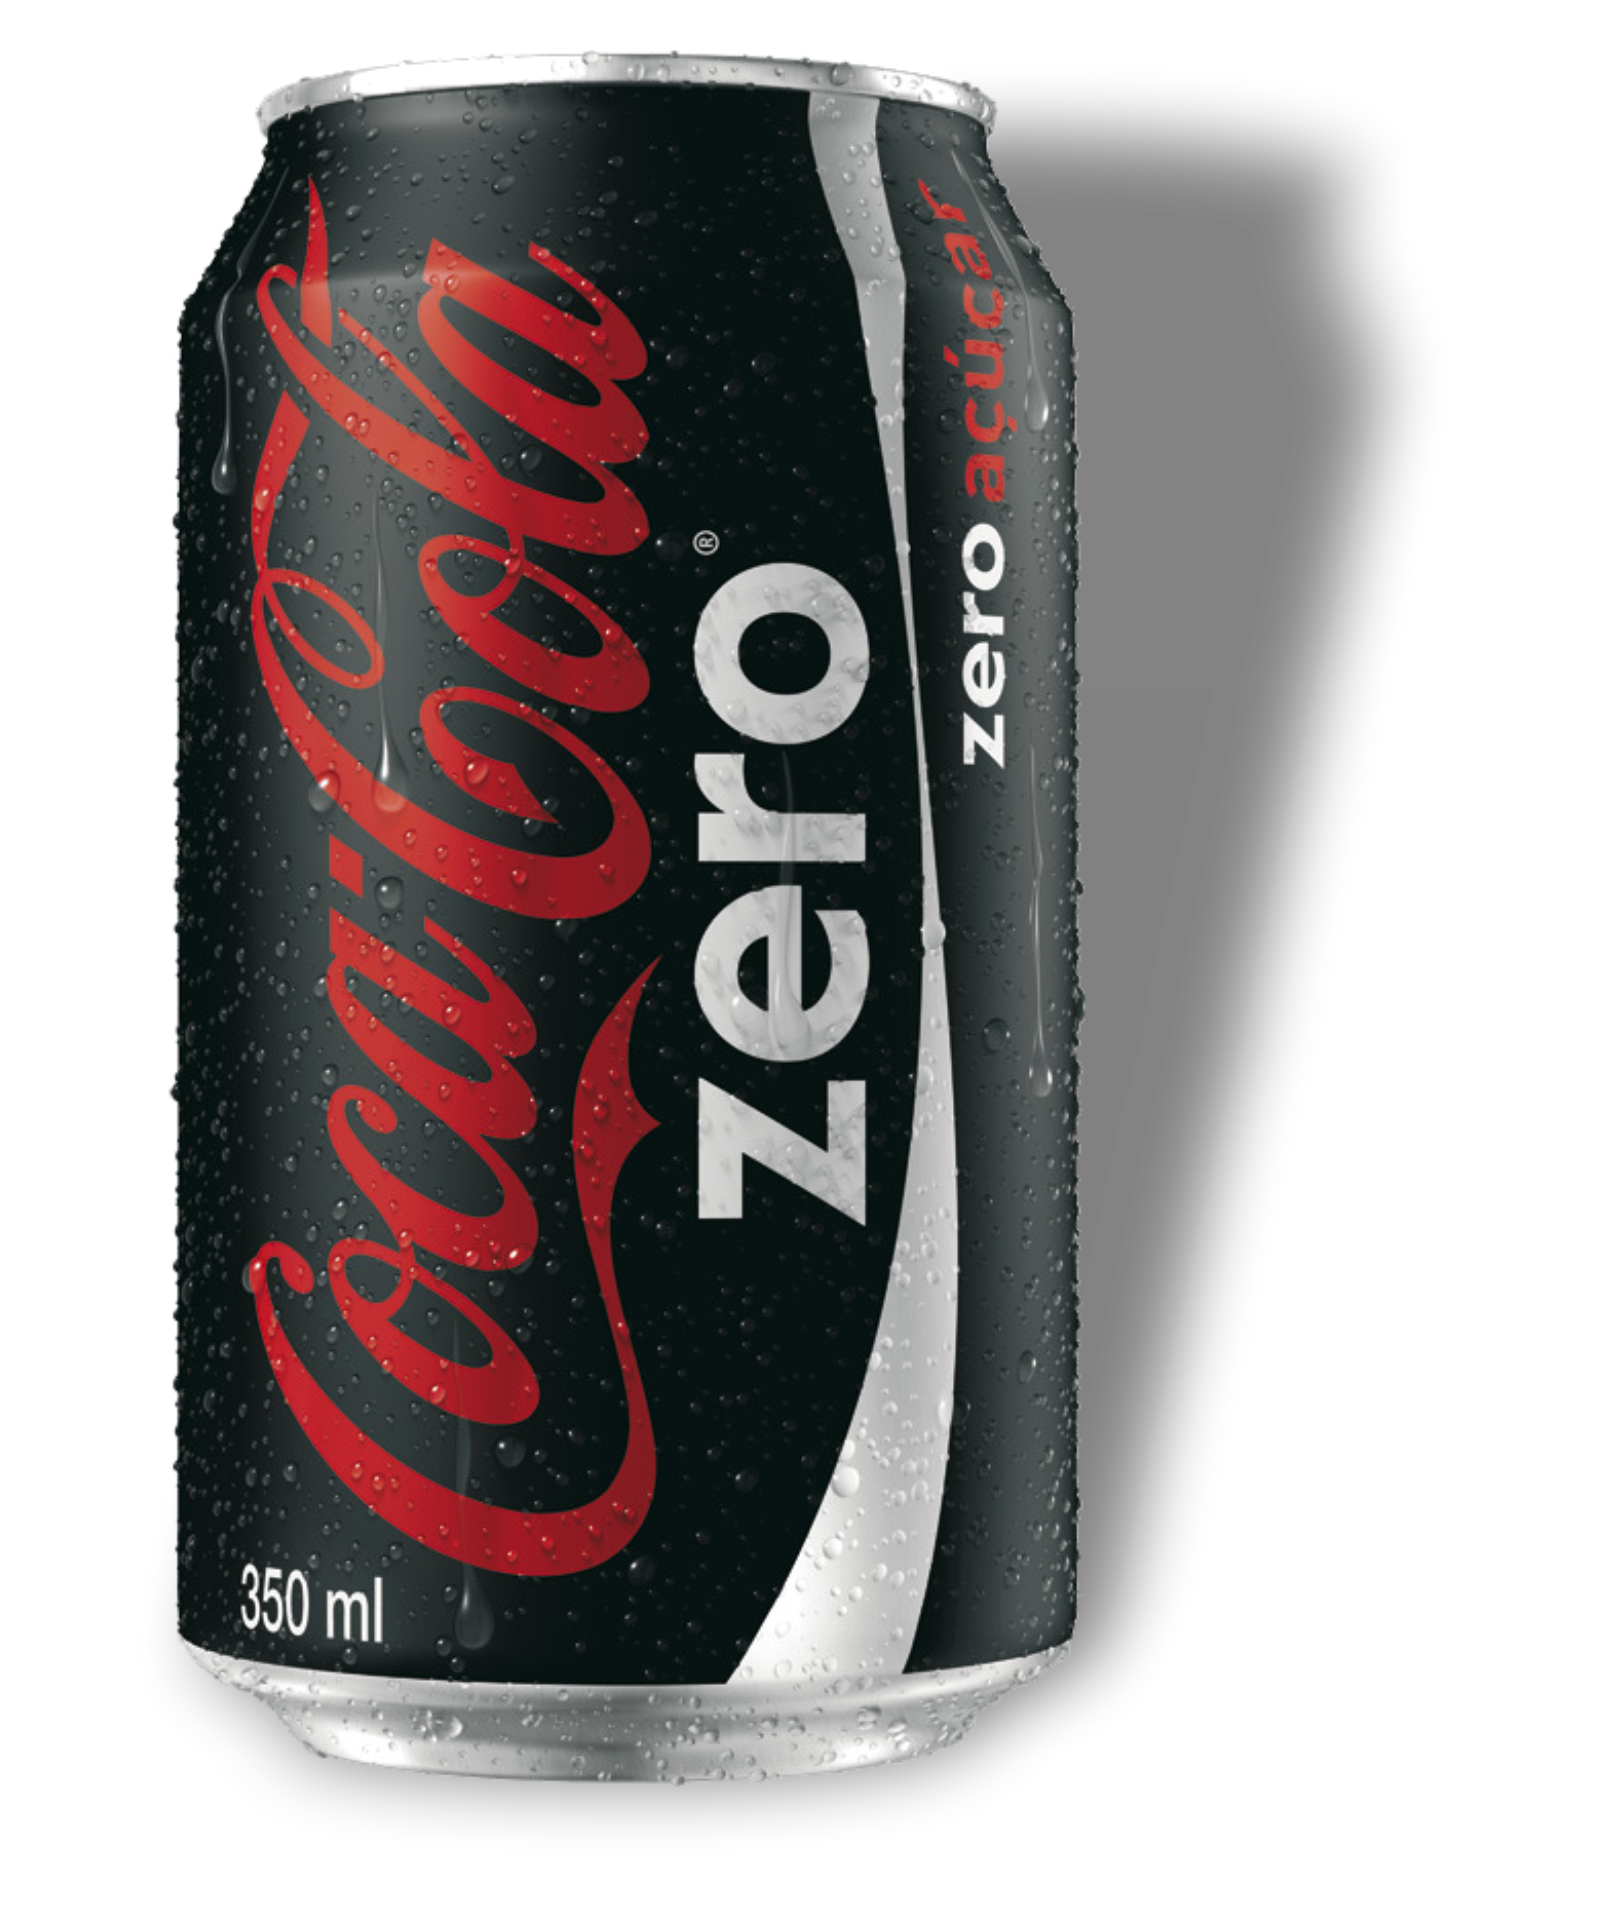 Coca-Cola Zero 24x33cl Cans [S202]